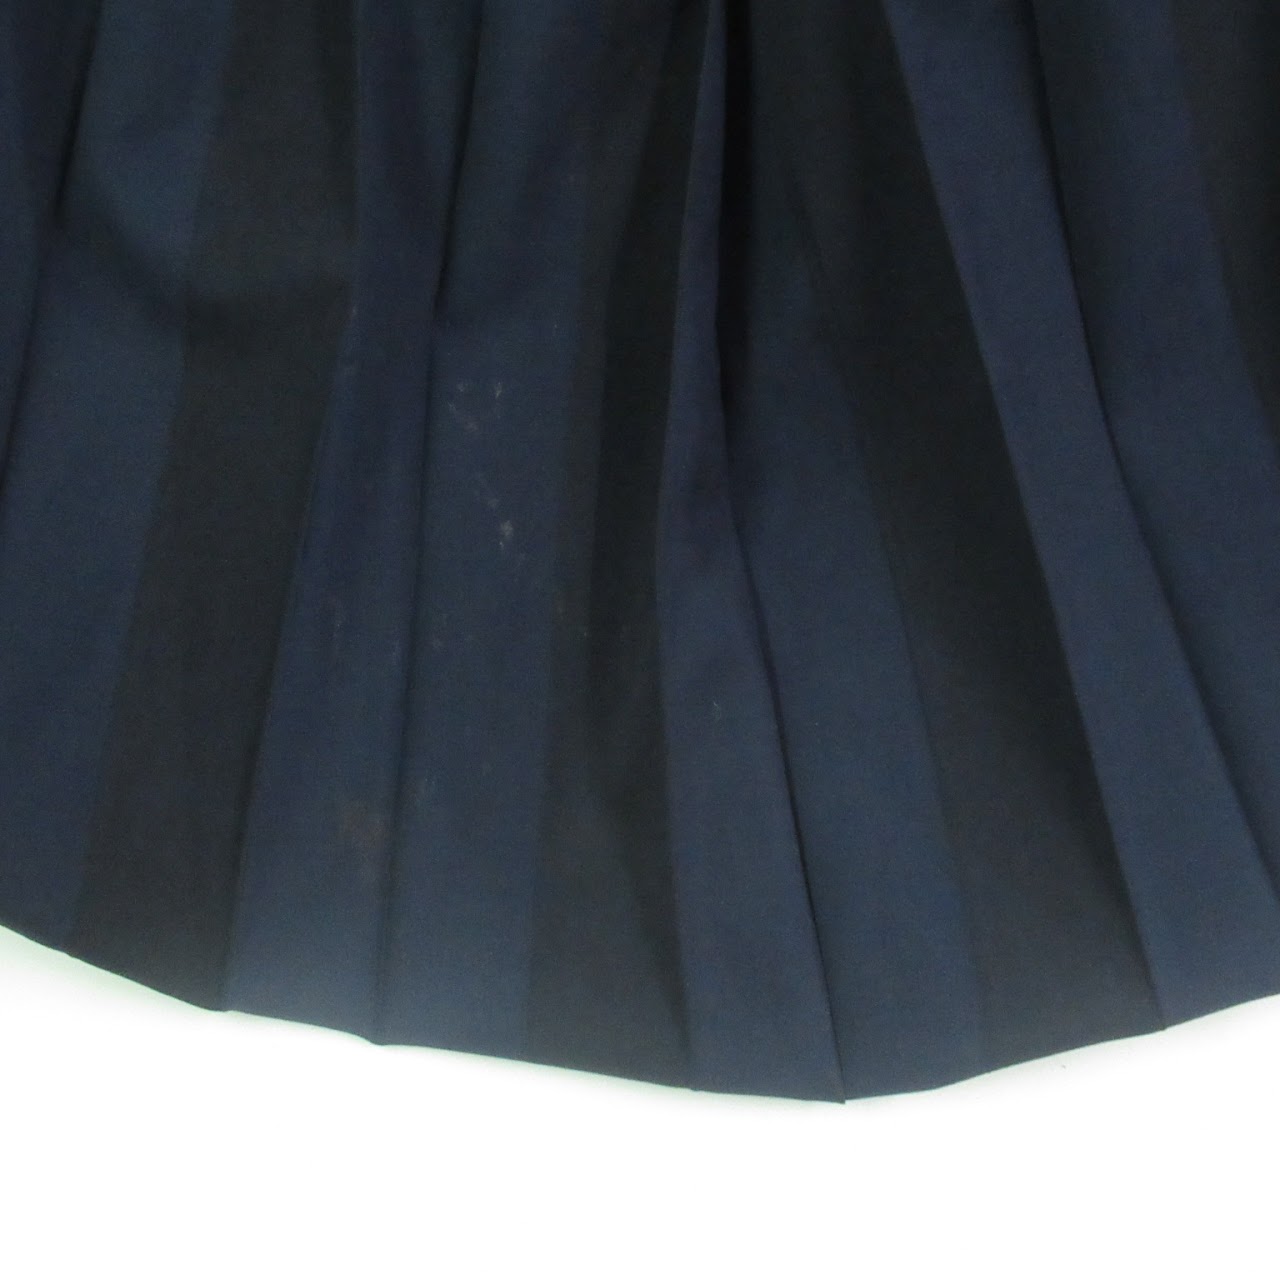 Prada Pleated Black & Blue Striped Skirt